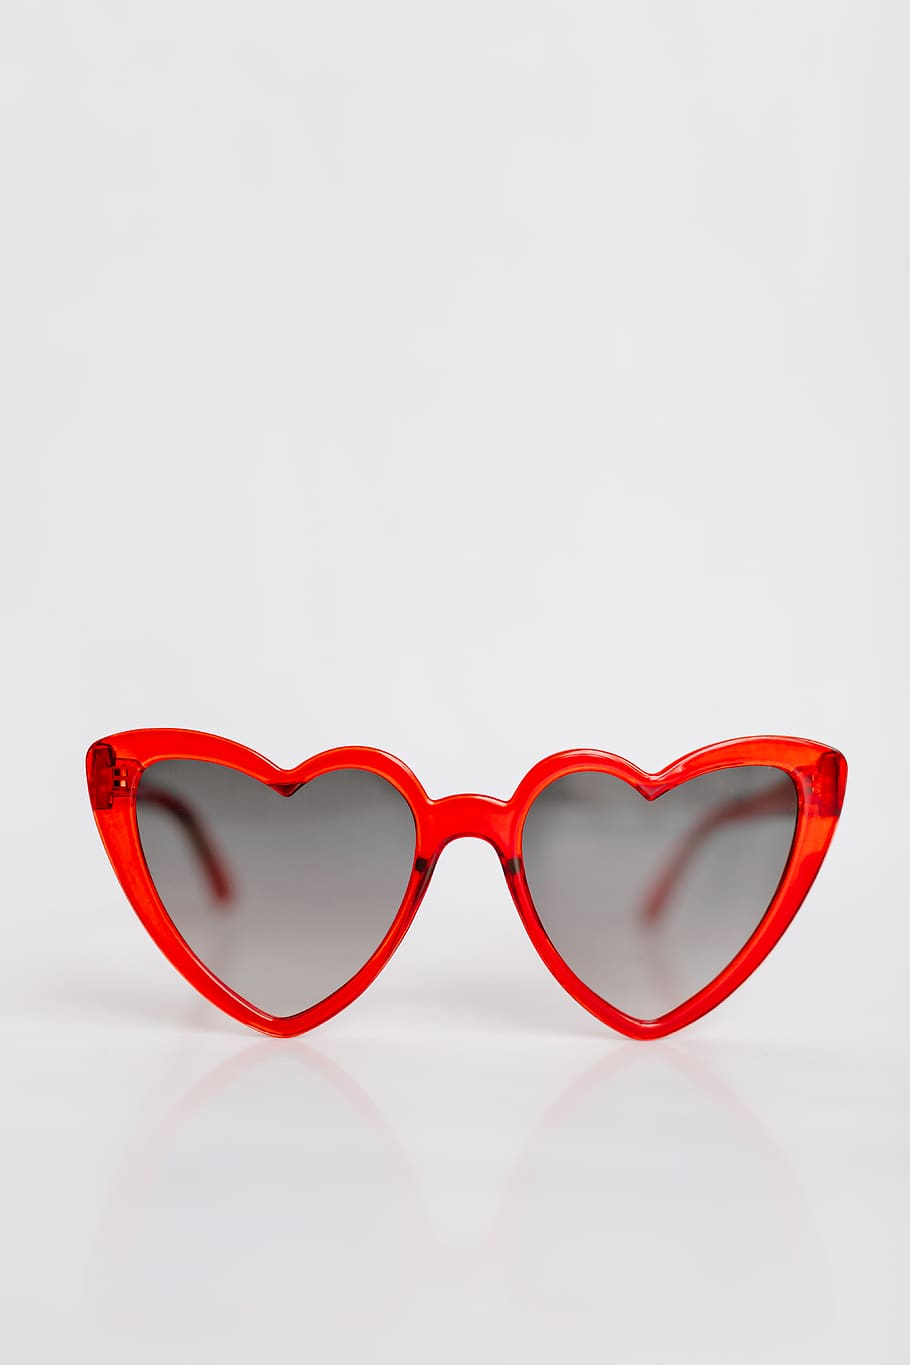 sunglasses, merah, kacamata, lucu, accesories, fashion, love, valentines, h...